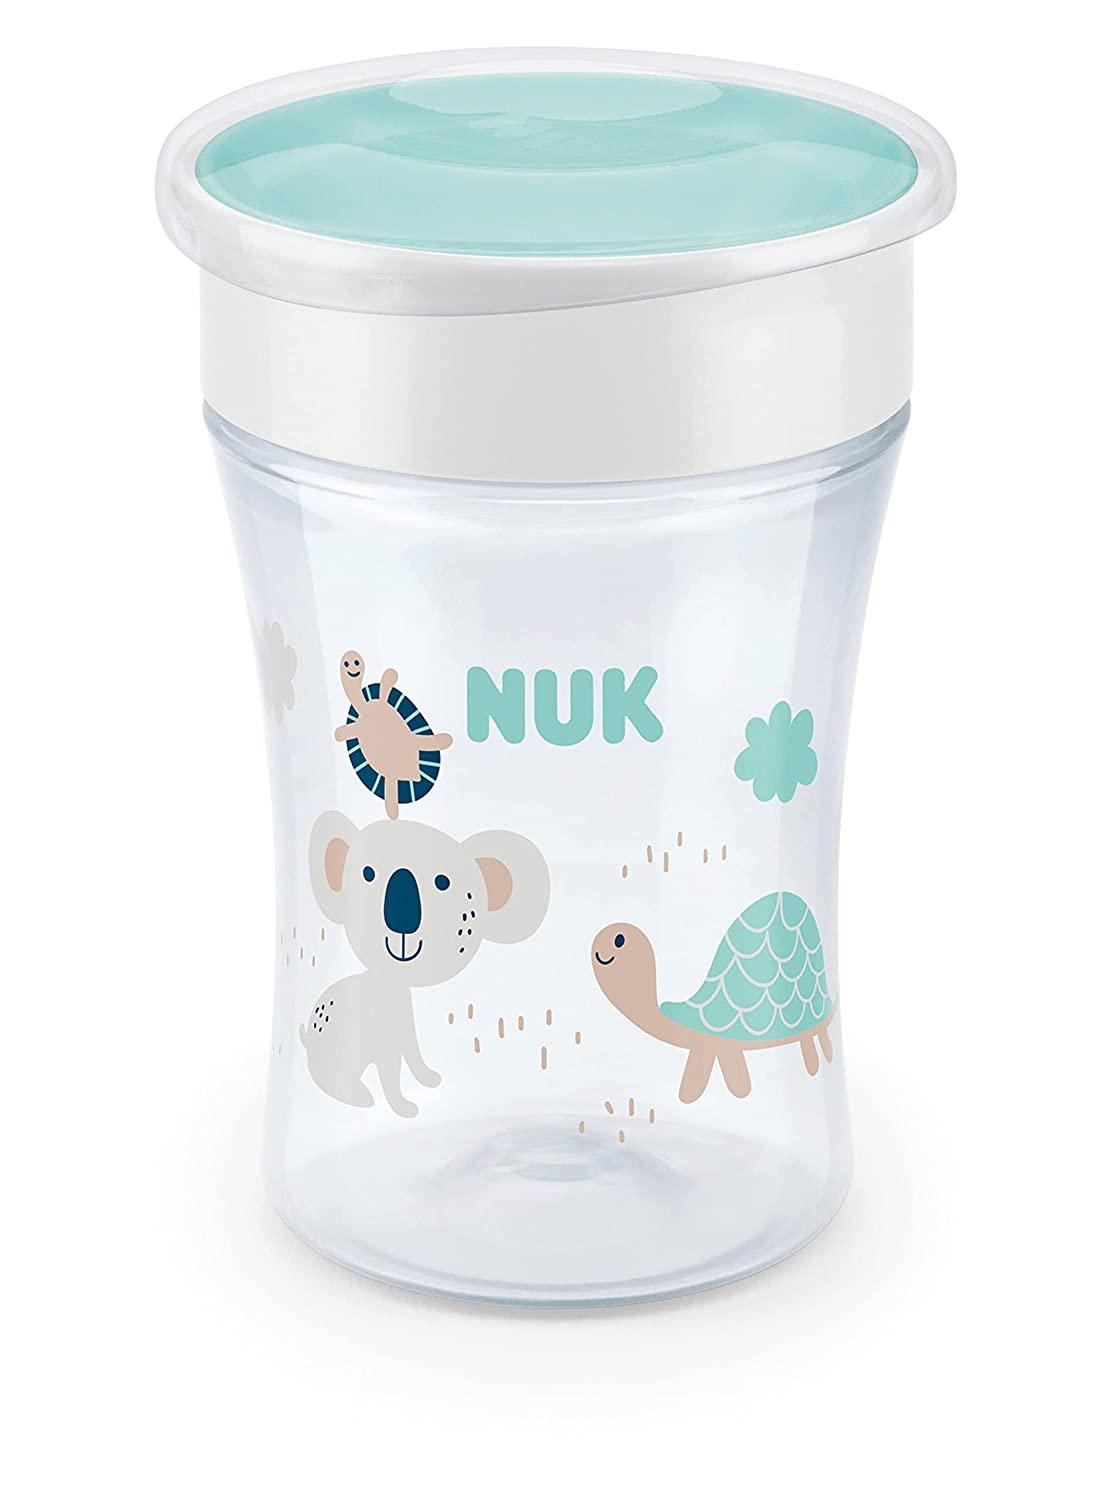  NUK Evolution 360 Cup 8+ Months Pink 2 Pack 8 oz (240 ml) Each